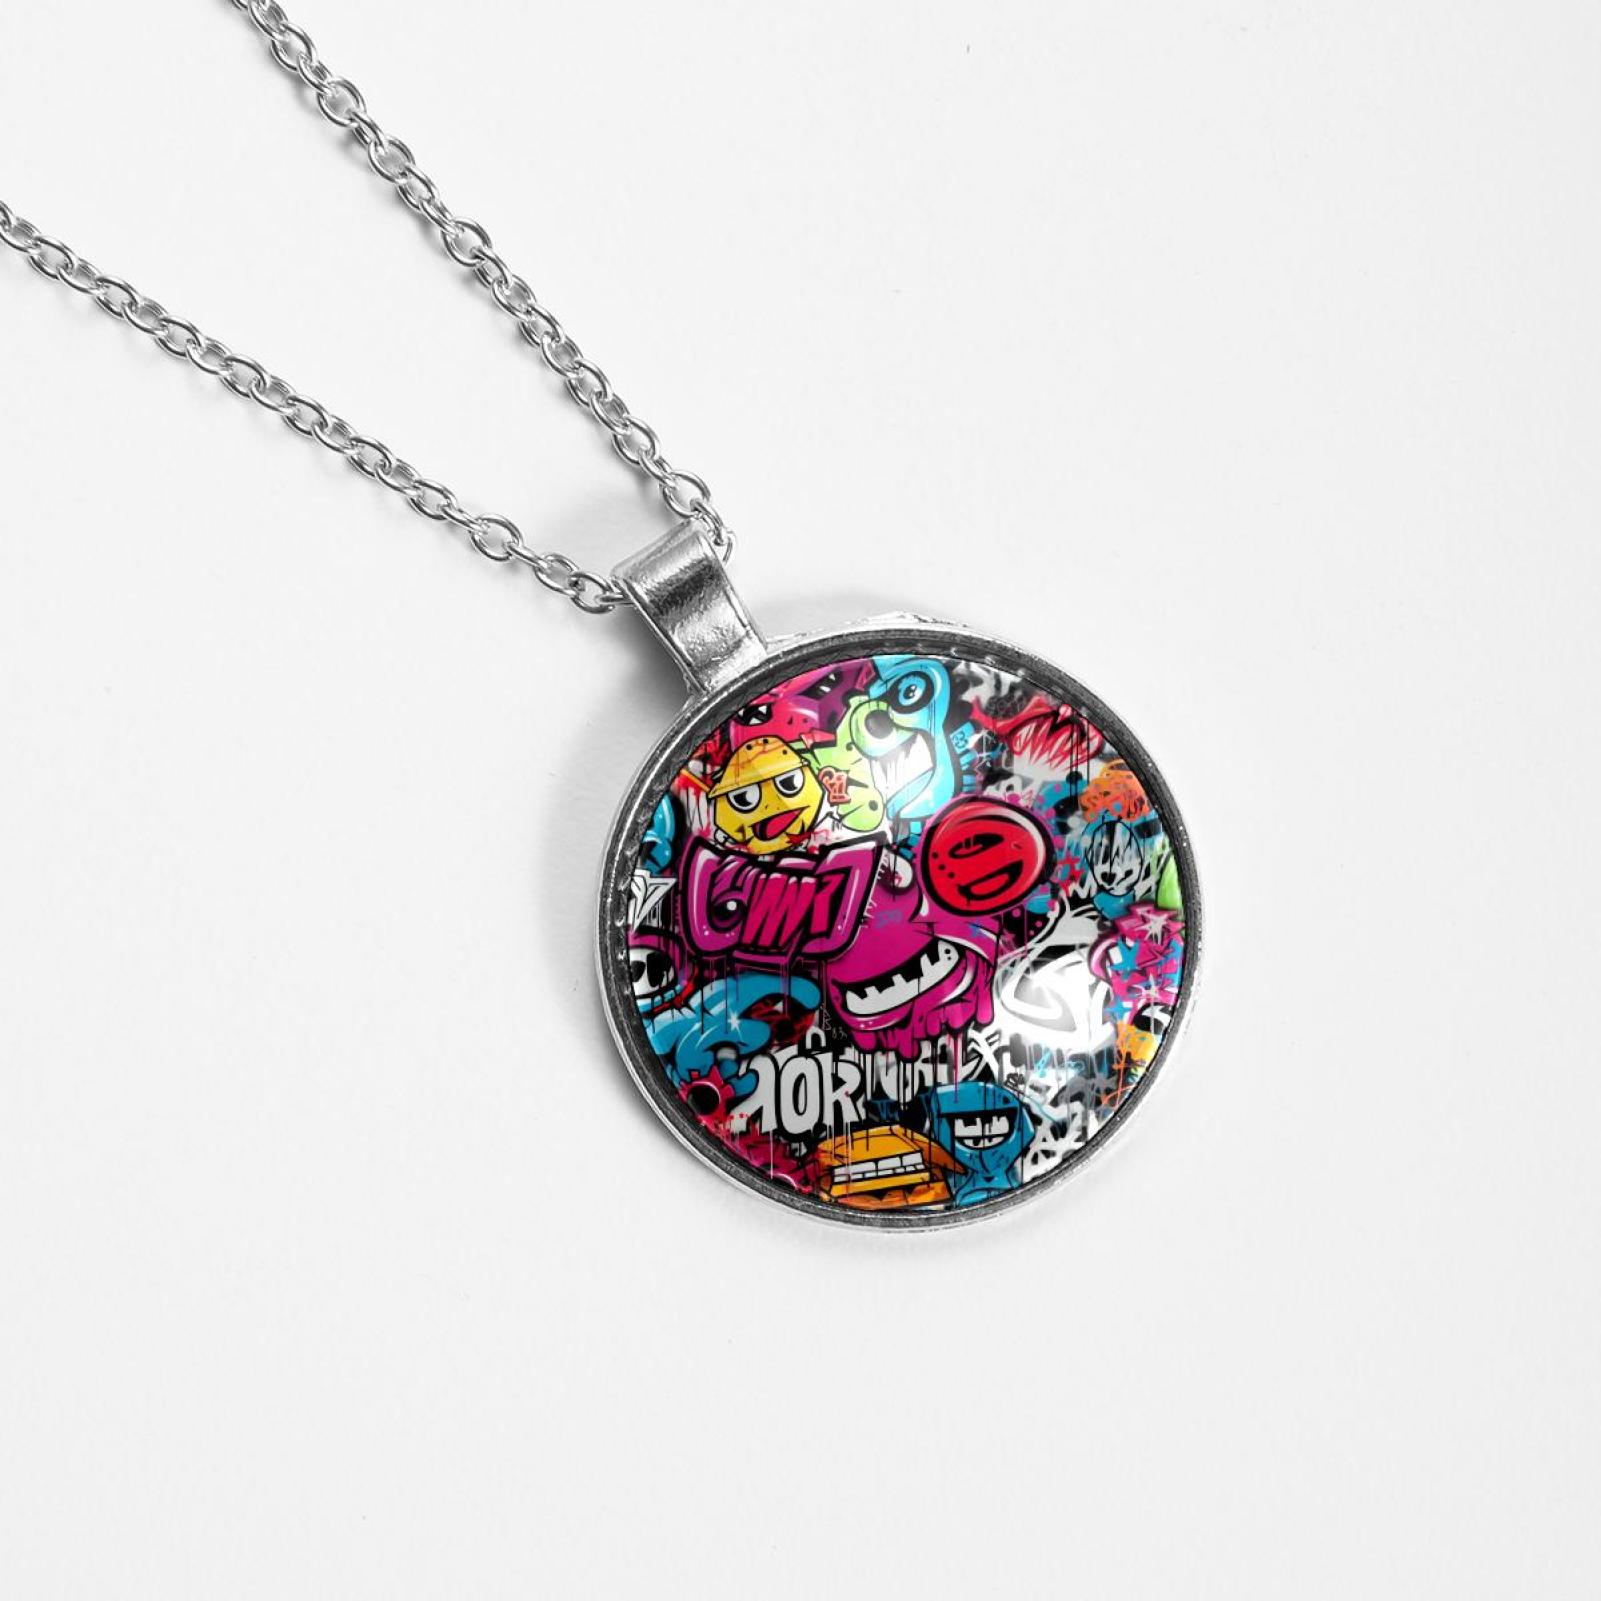 Graffiti Glass Circular Pendant Necklace - Elegant Jewelry for Women ...